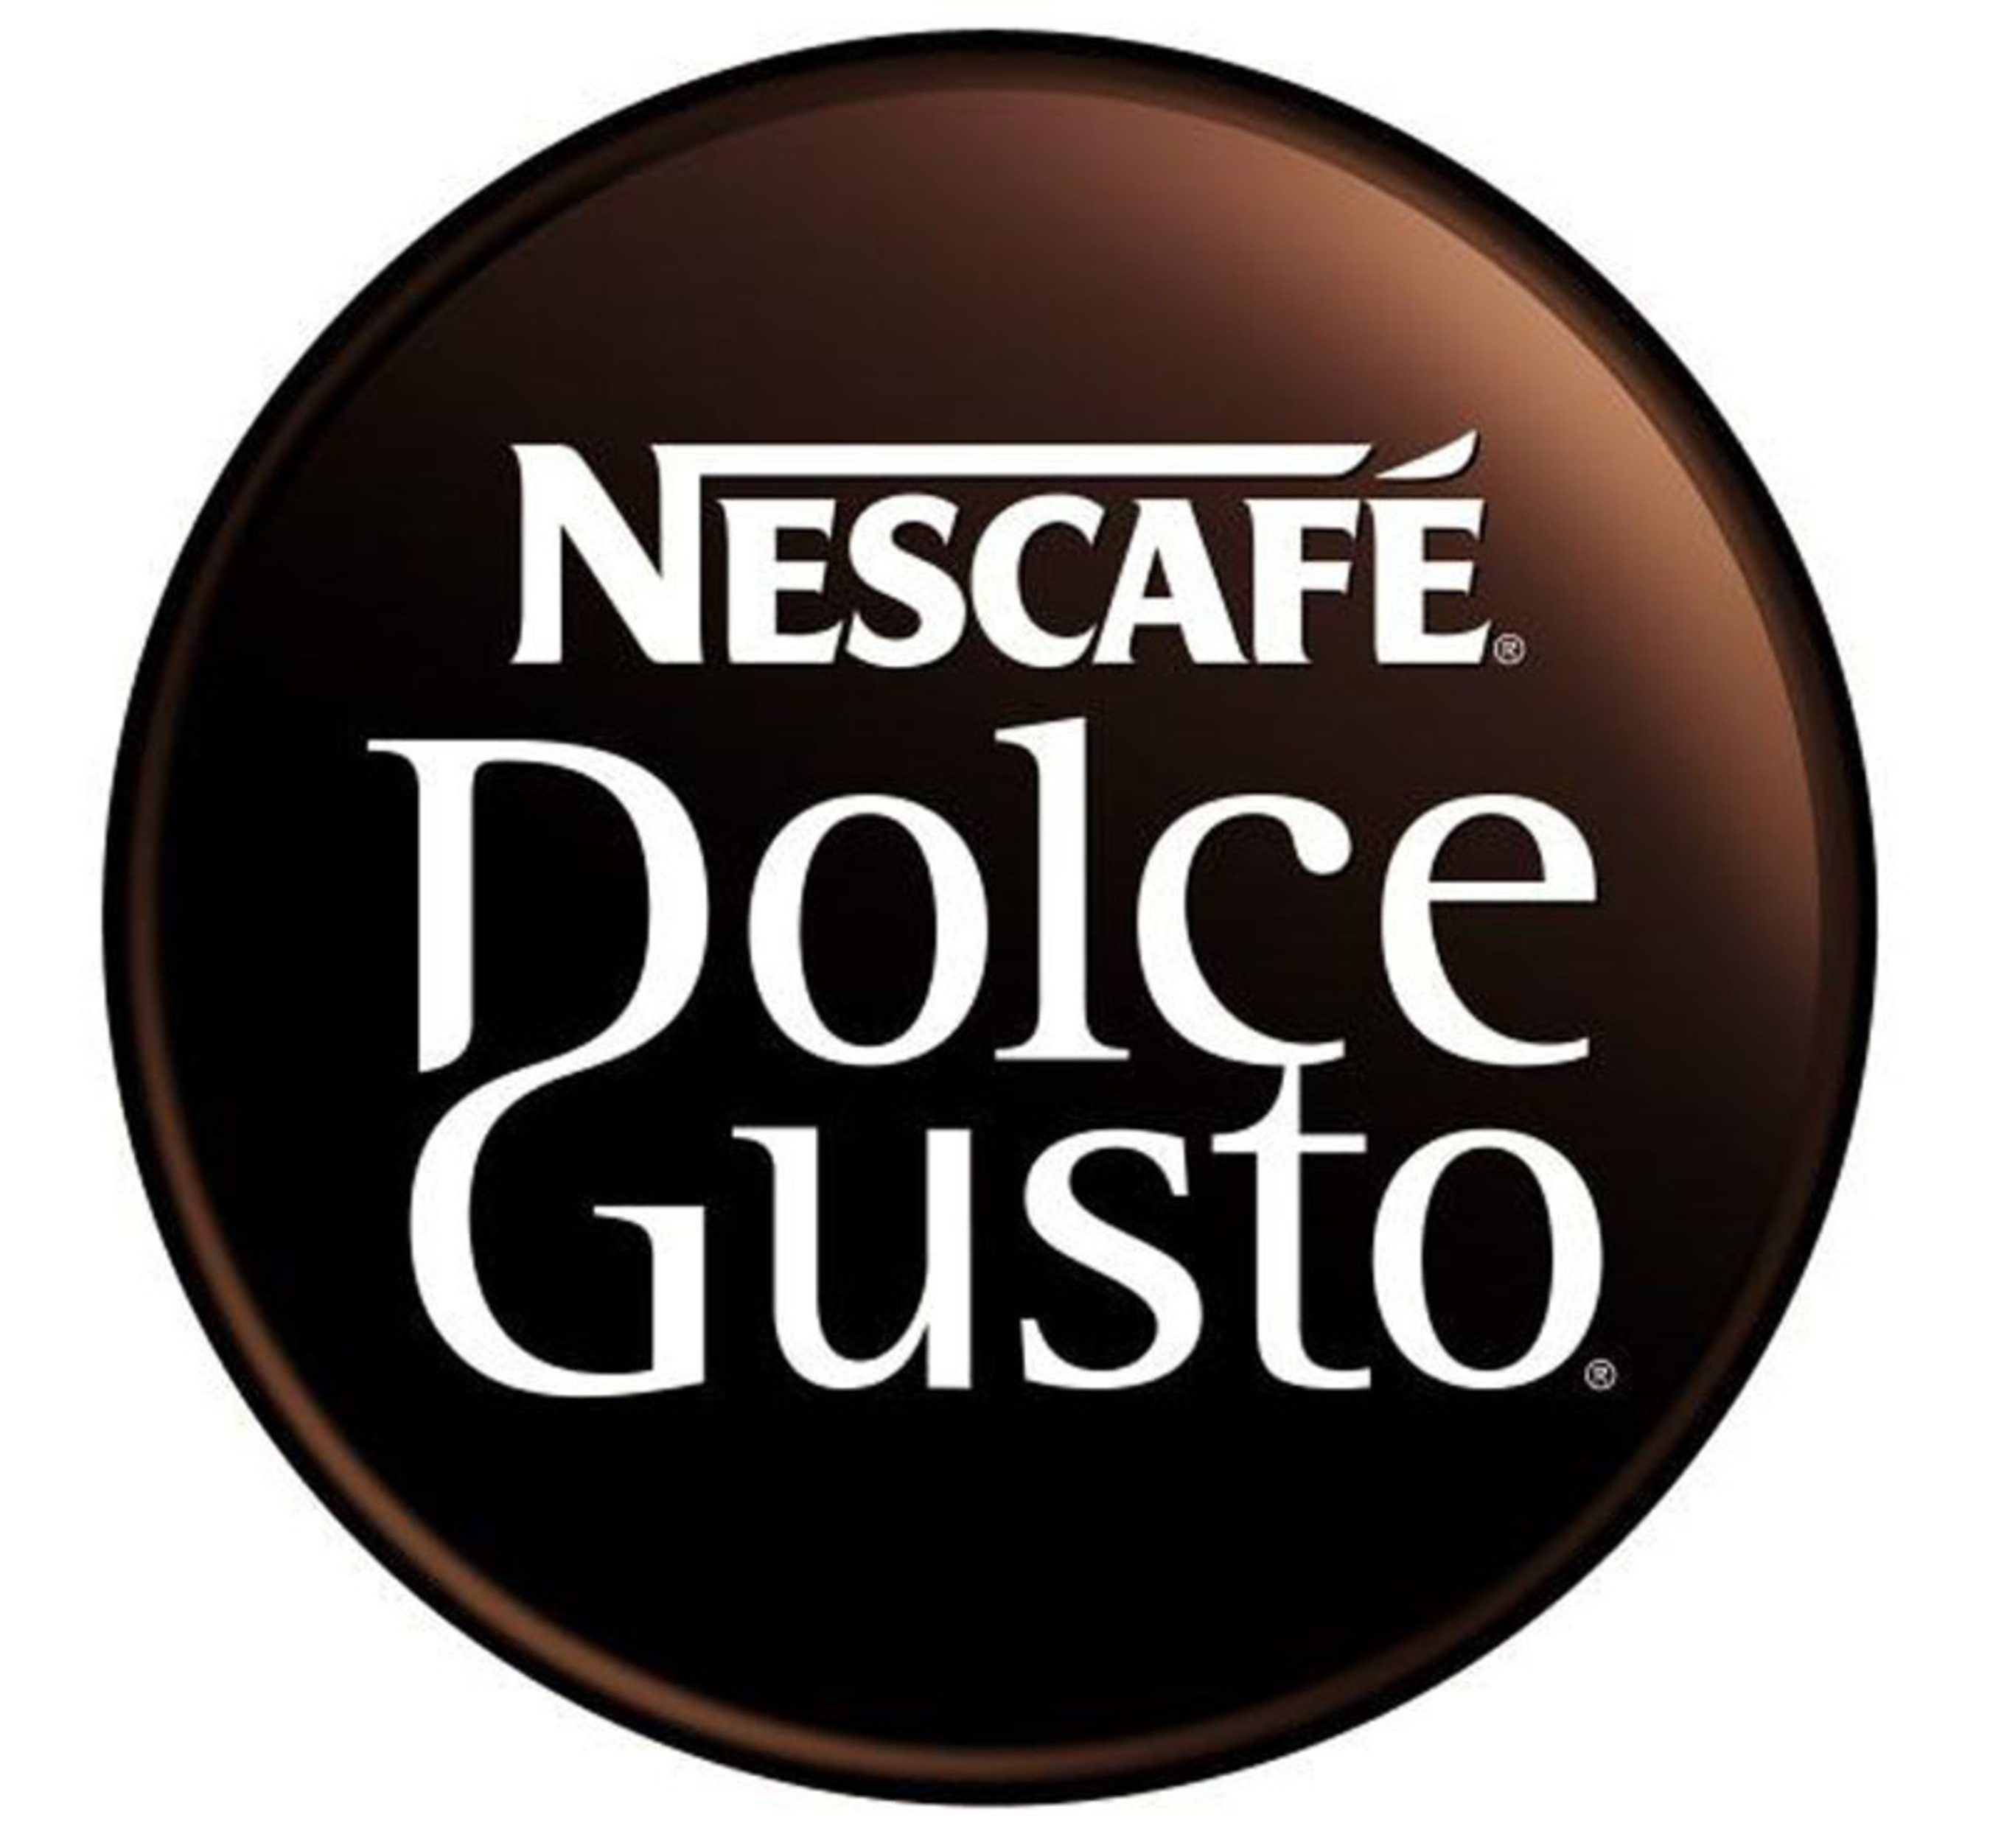 NESCAFE Dolce Gusto. (PRNewsFoto/NESCAFE Dolce Gusto) (PRNewsFoto/NESCAFE DOLCE GUSTO)